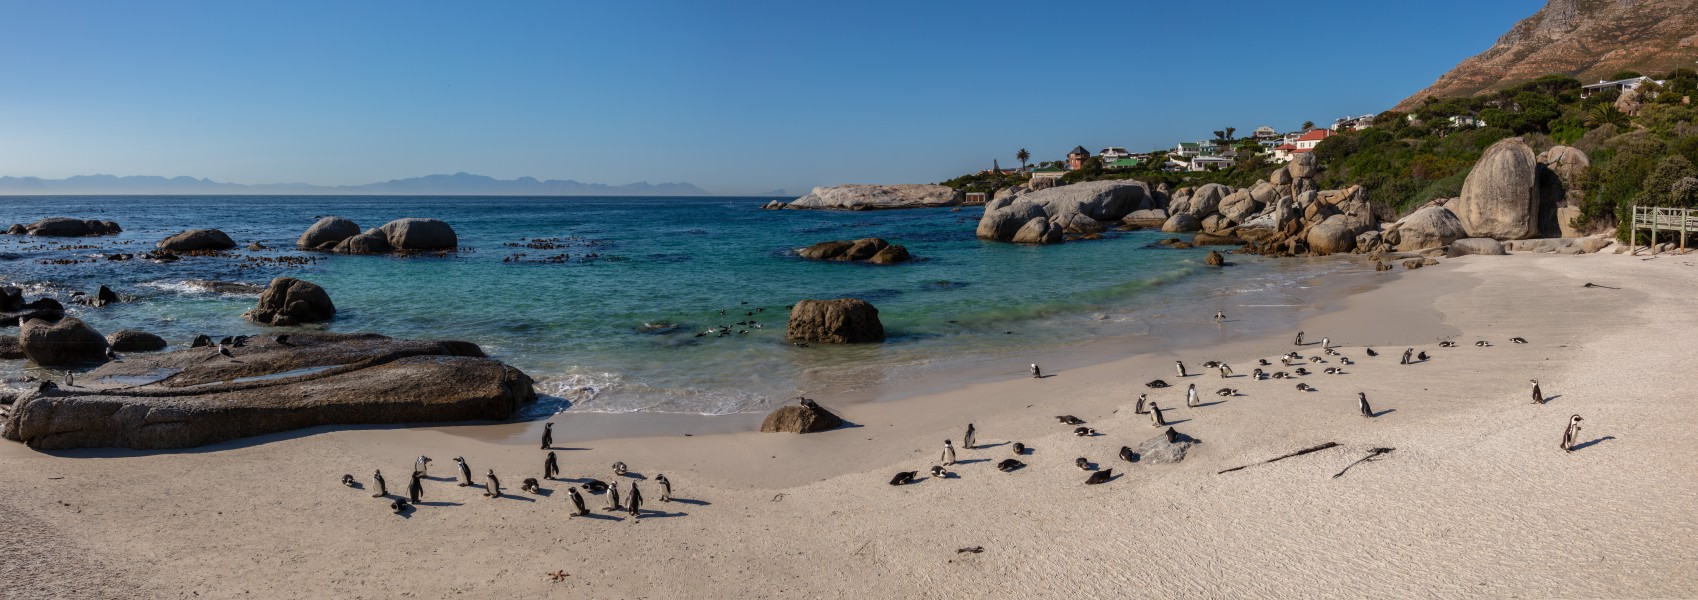 Pingüinos de El Cabo (Spheniscus demersus), Playa de Boulders, Simon's Town, Sudáfrica, 2018-07-23 PAN 29-31